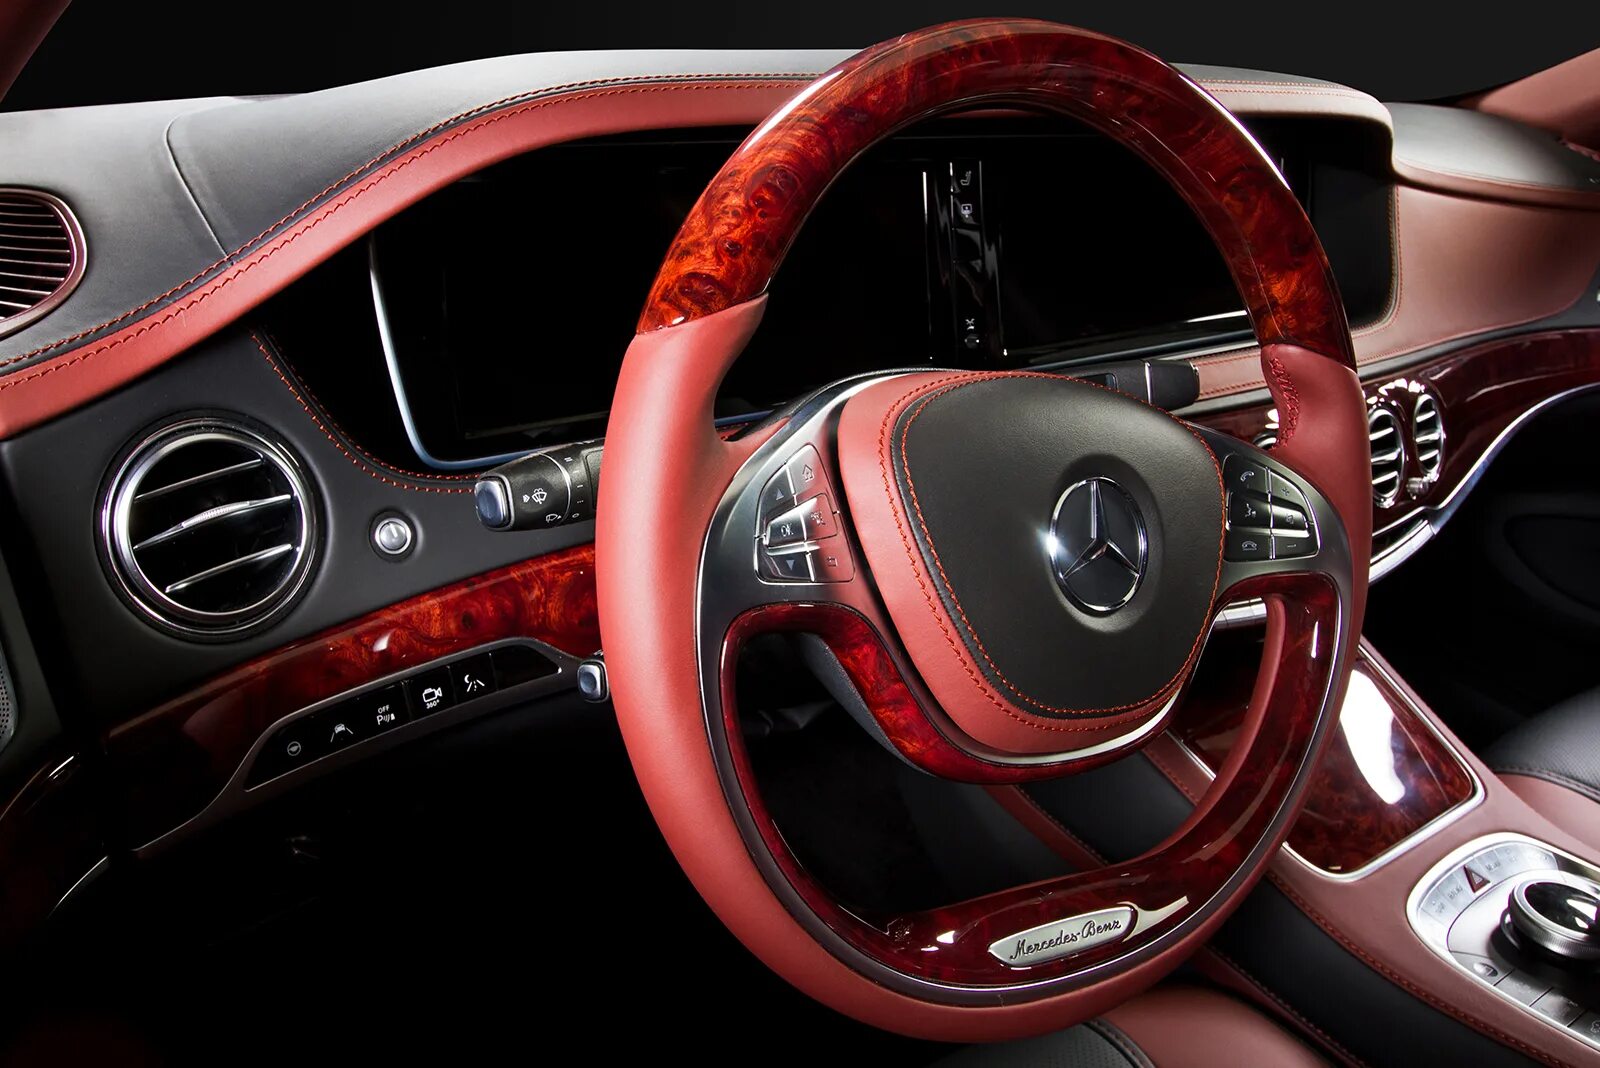 Mercedes Benz s class w222 салон красная кожа. Mercedes s63 w222 салон. Красный Мерседес s class w222. Mercedes Benz s63 AMG w222 салон.